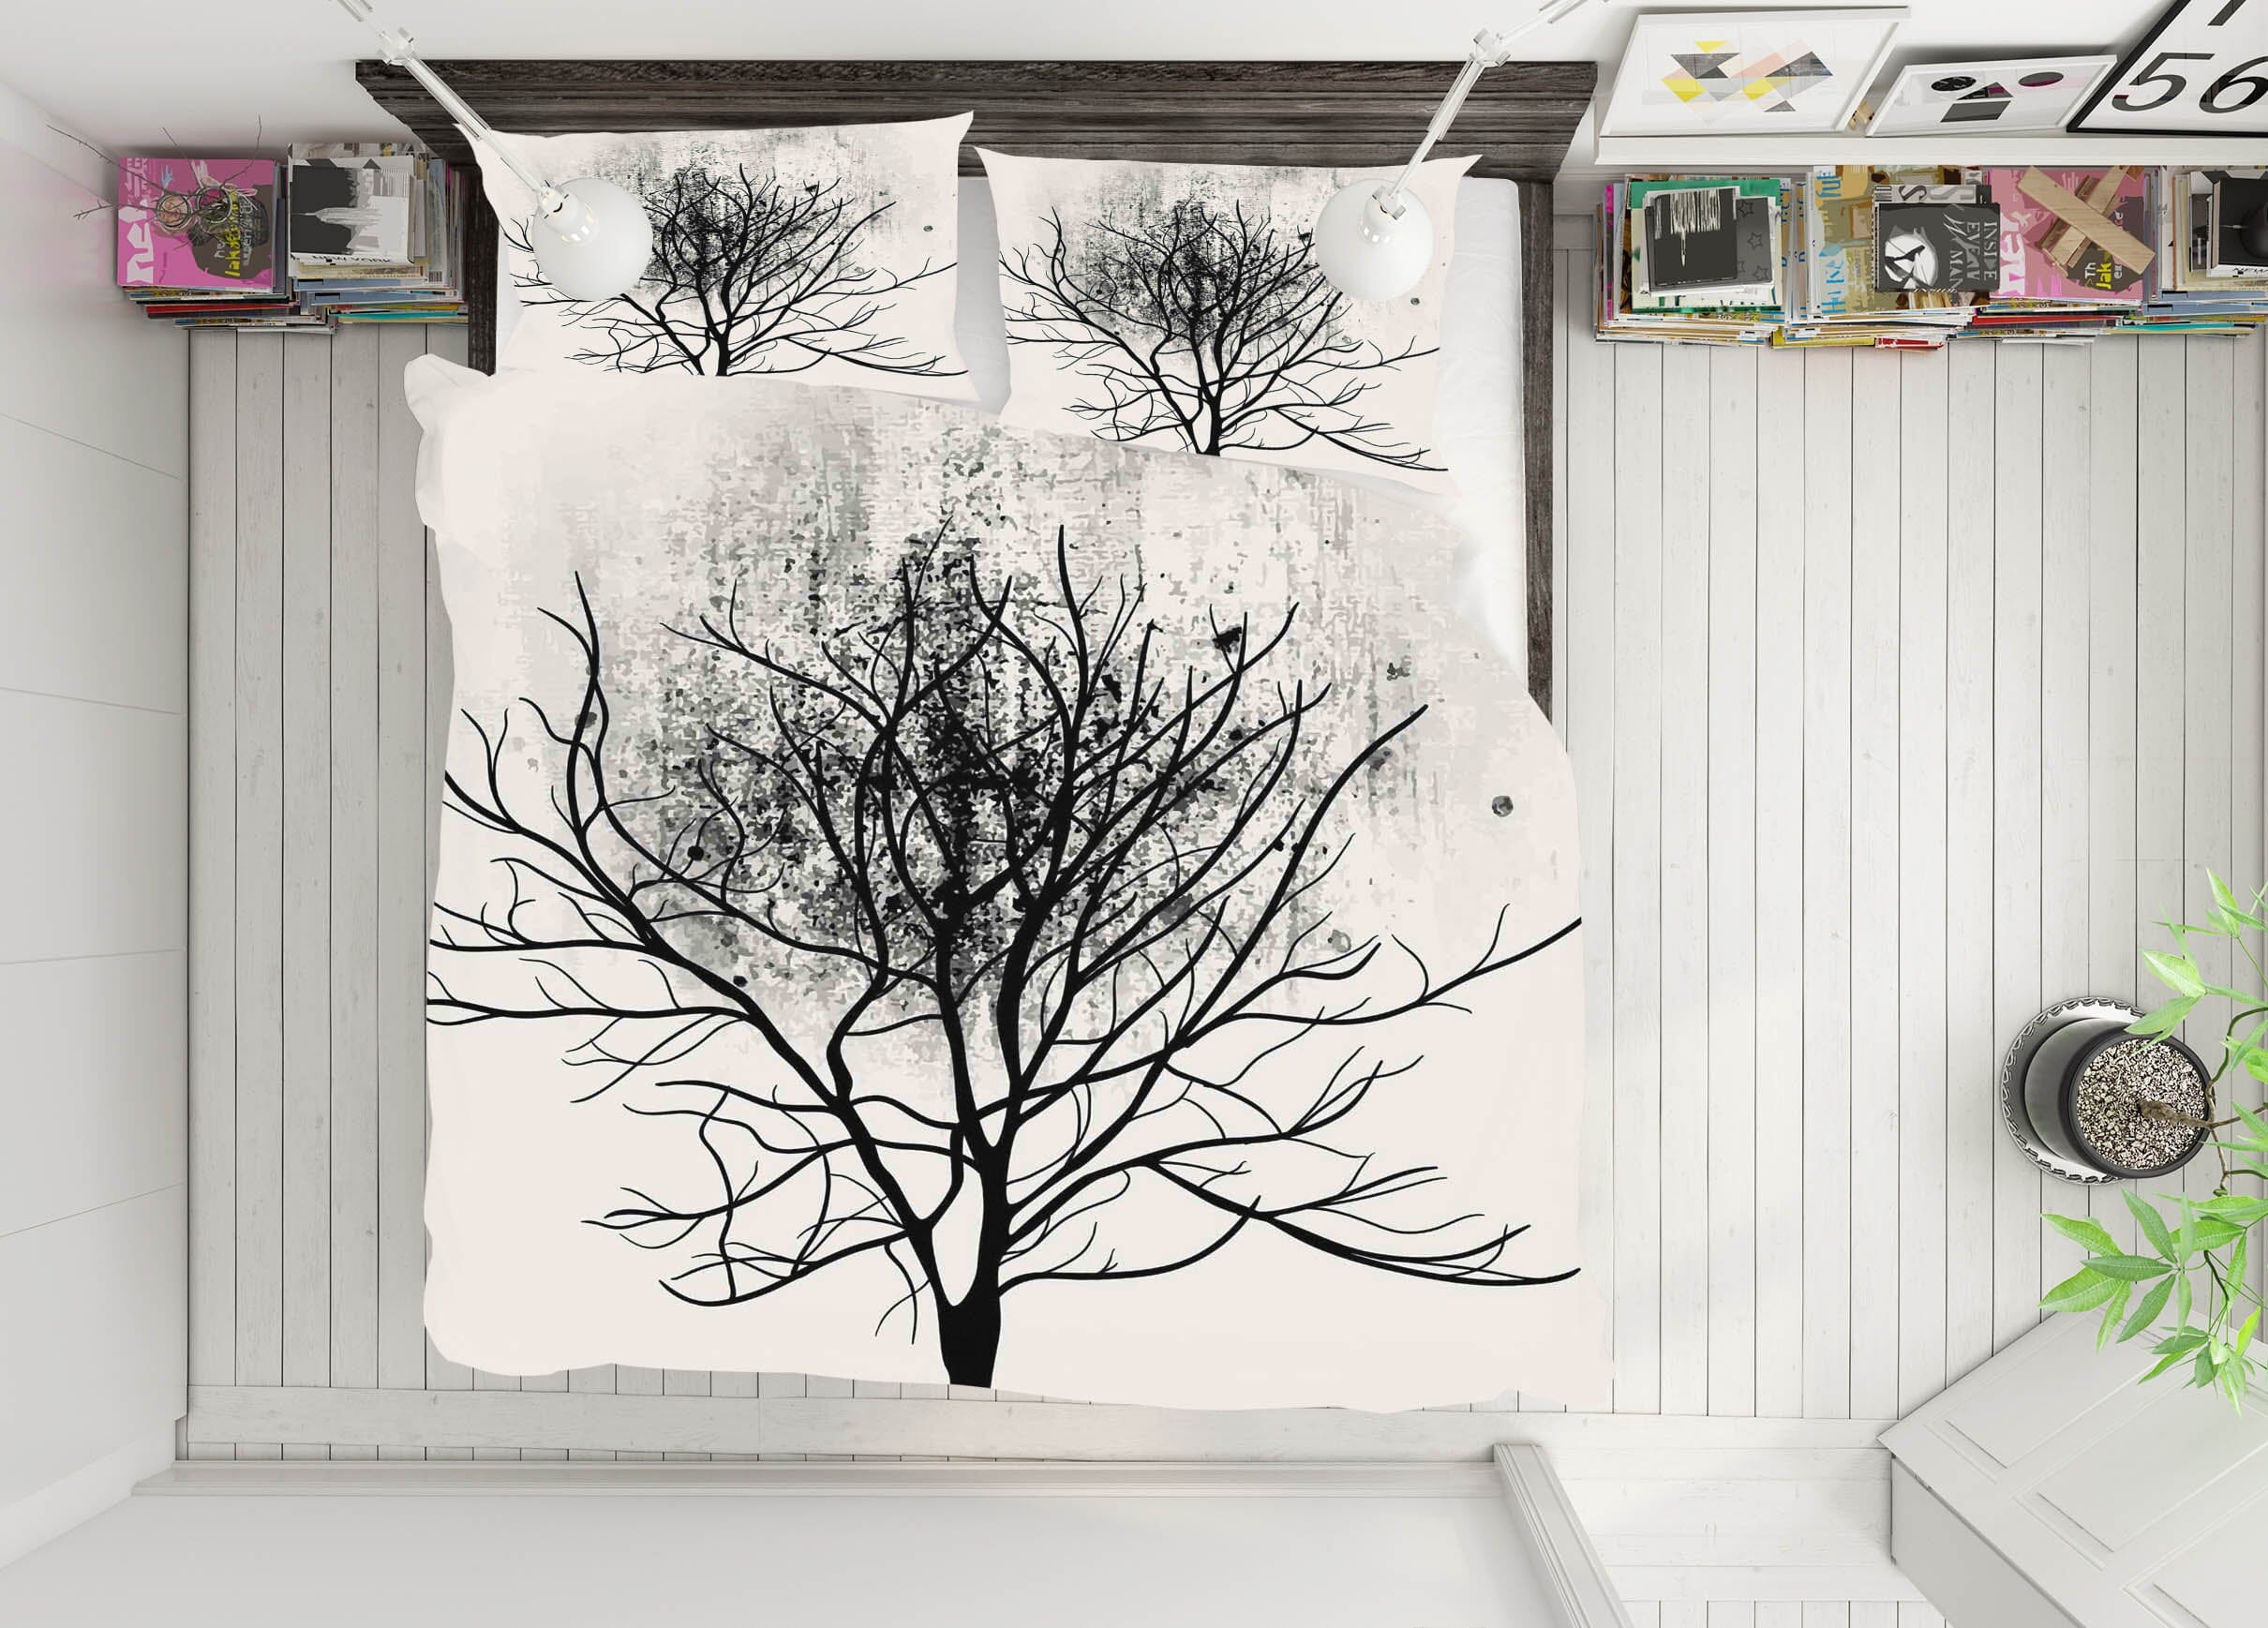 3D Dead Branch 2123 Boris Draschoff Bedding Bed Pillowcases Quilt Quiet Covers AJ Creativity Home 